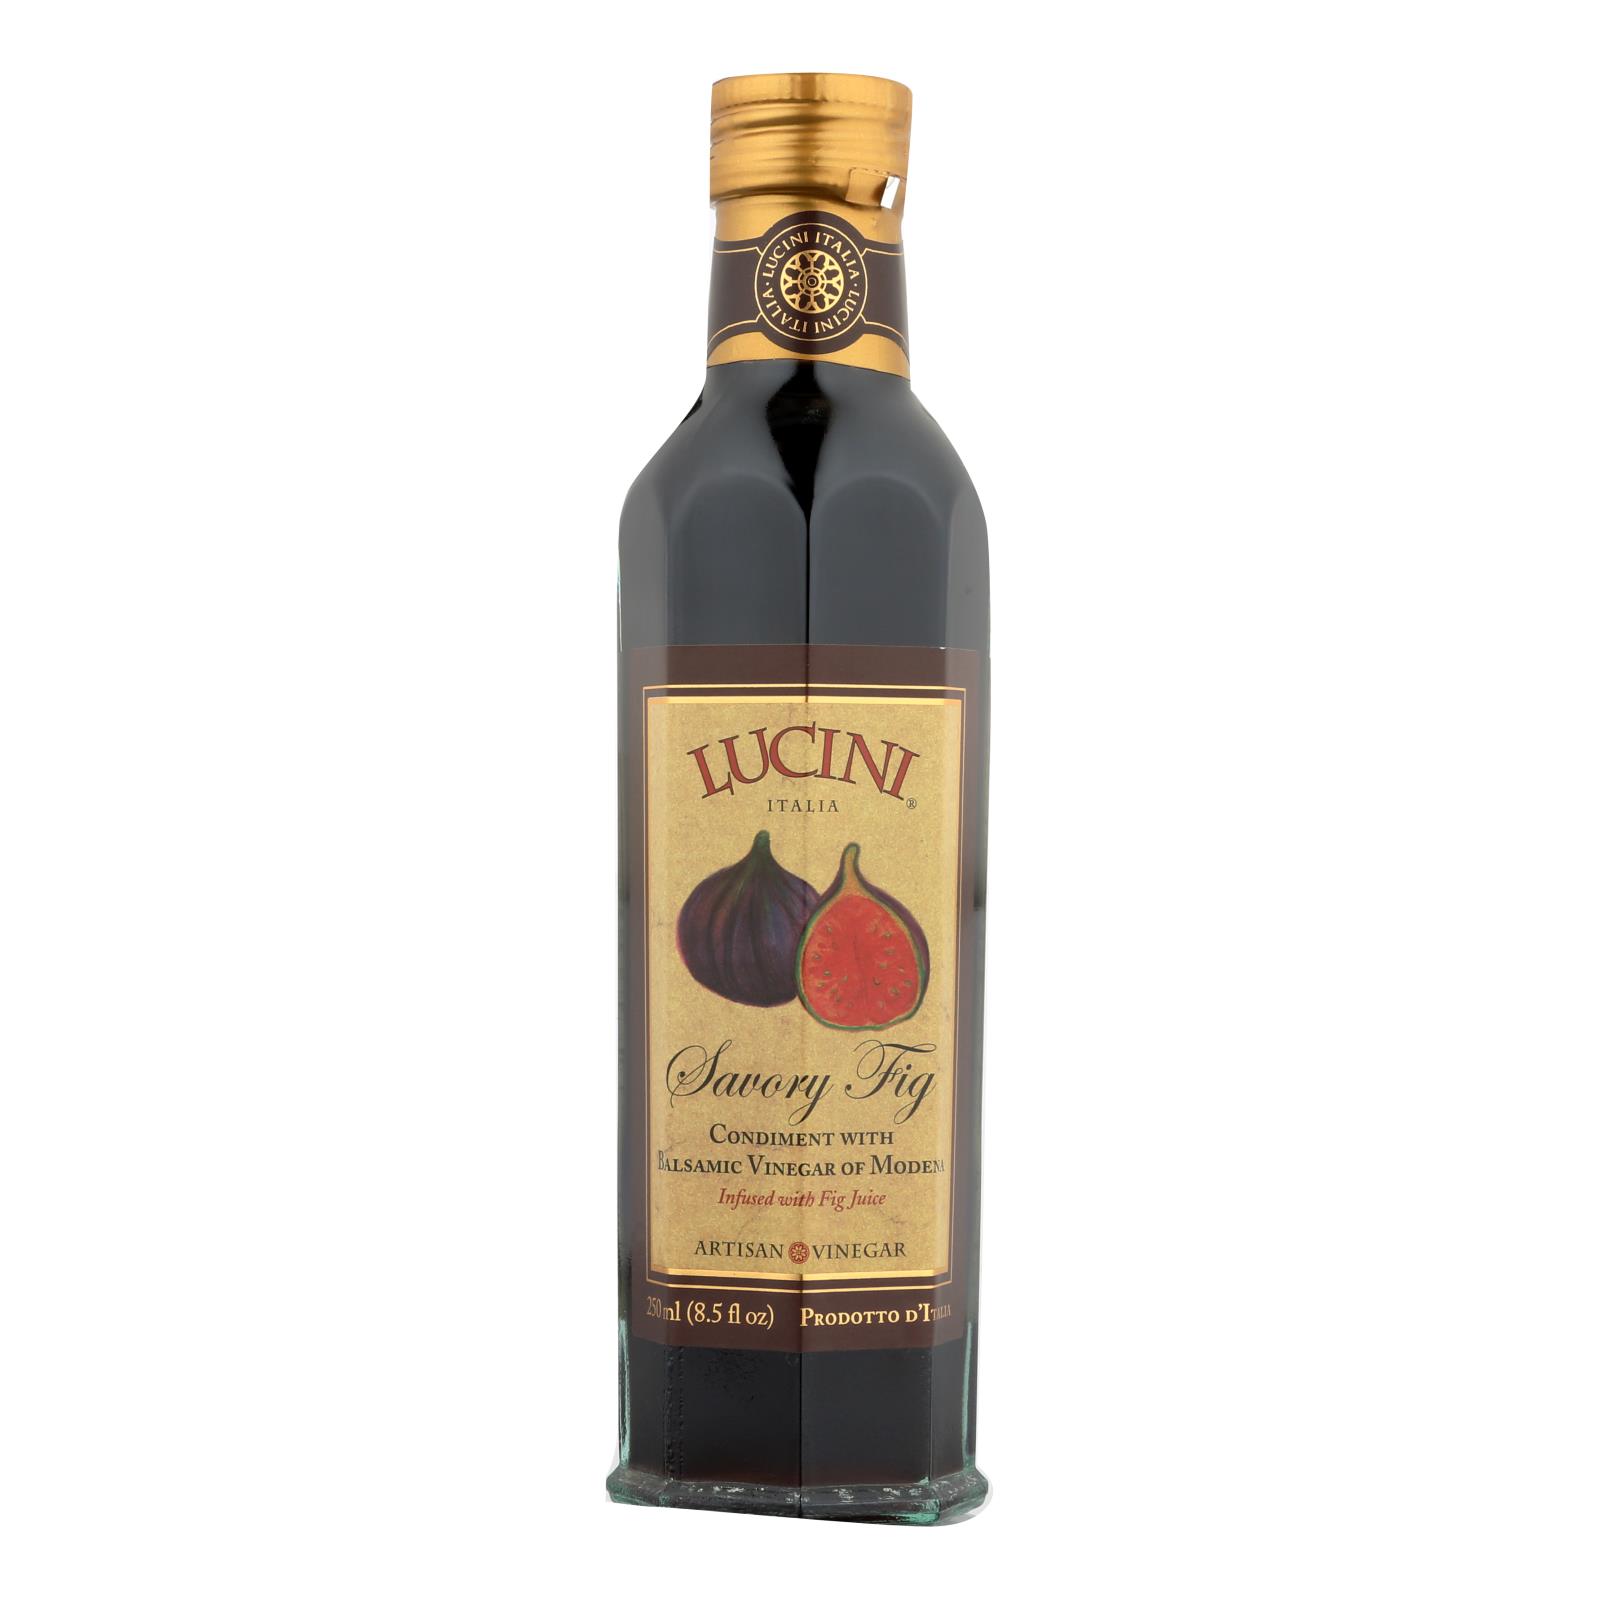 Lucini Italia Savory Fig Balsamic Artisan Vinegar - 6개 묶음상품 - 8.5 Fl oz.